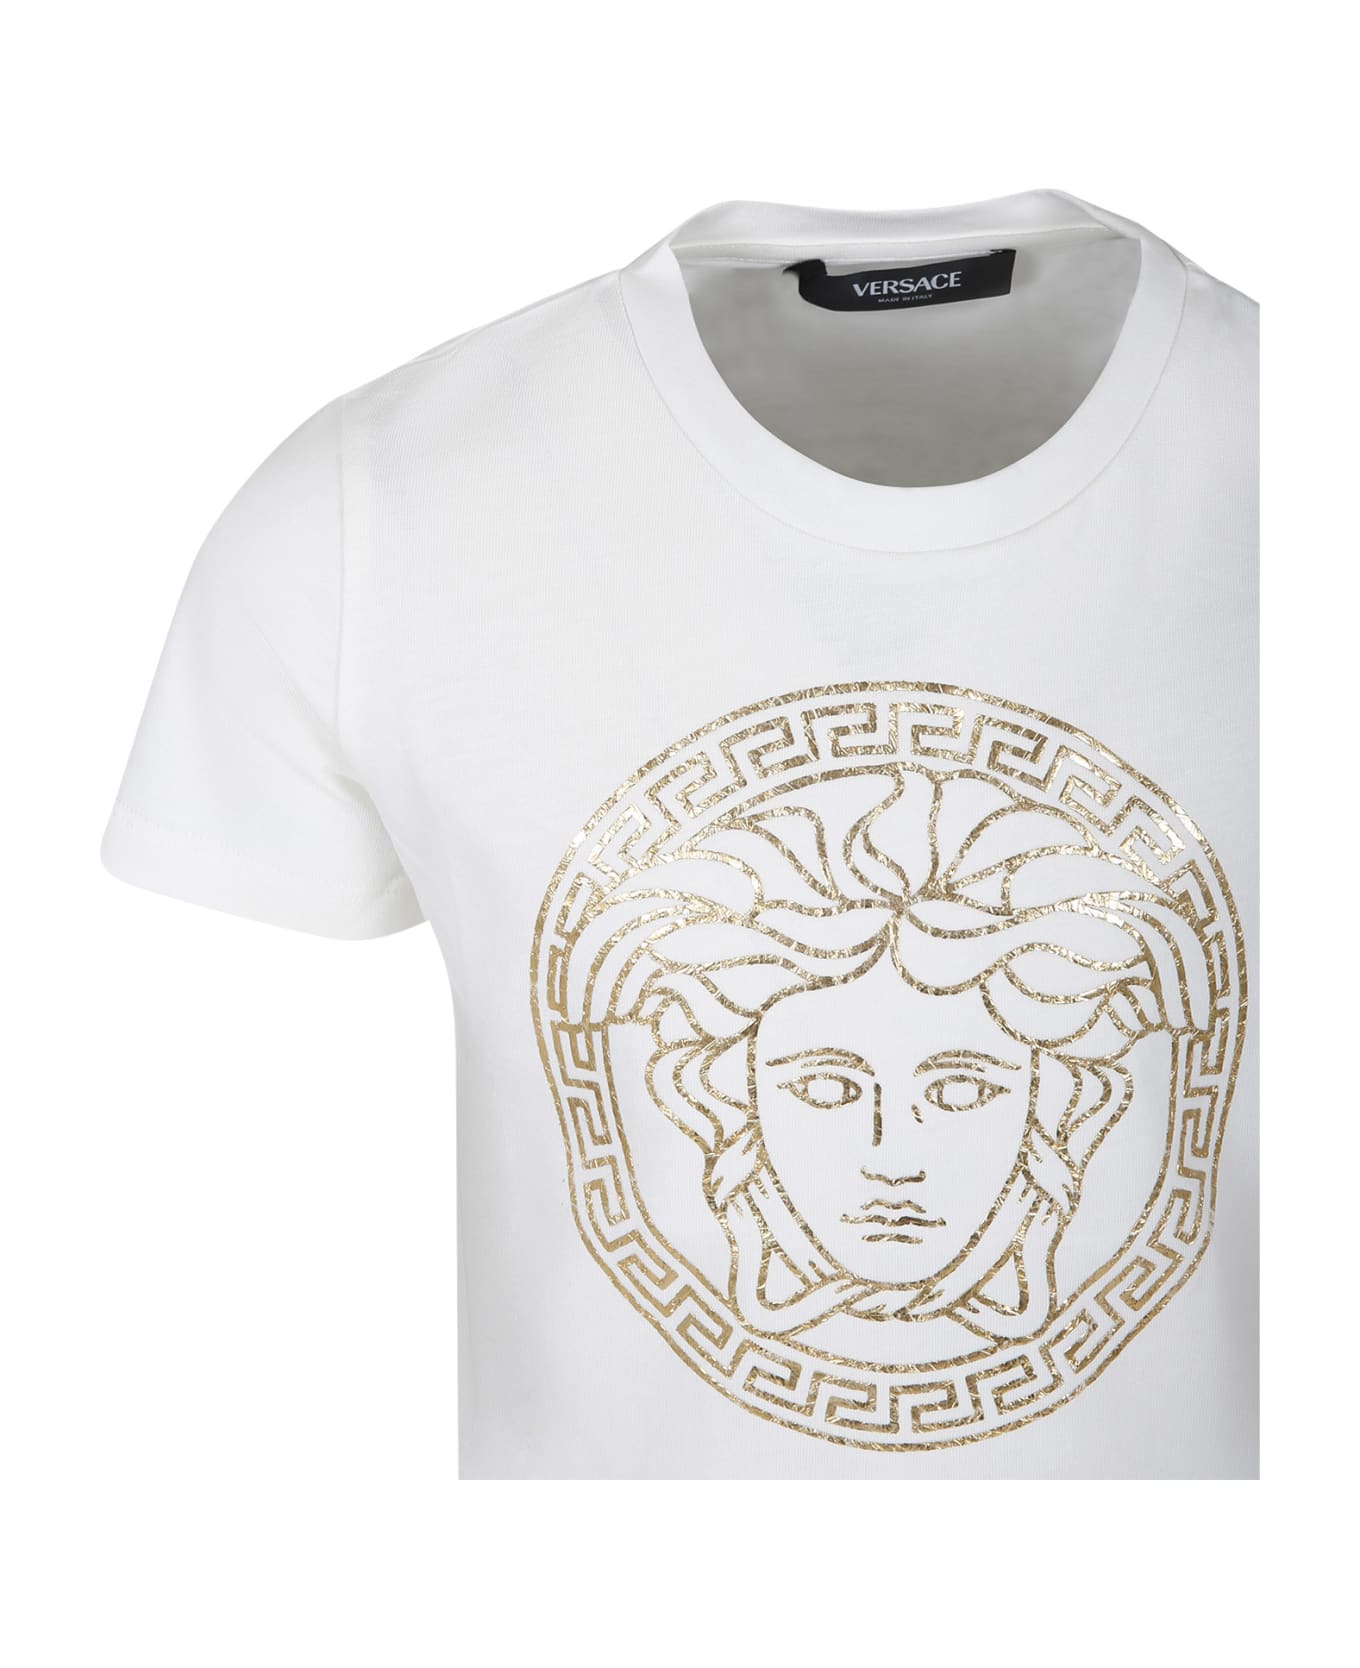 Versace White T-shirt For Kids With Medusa - White